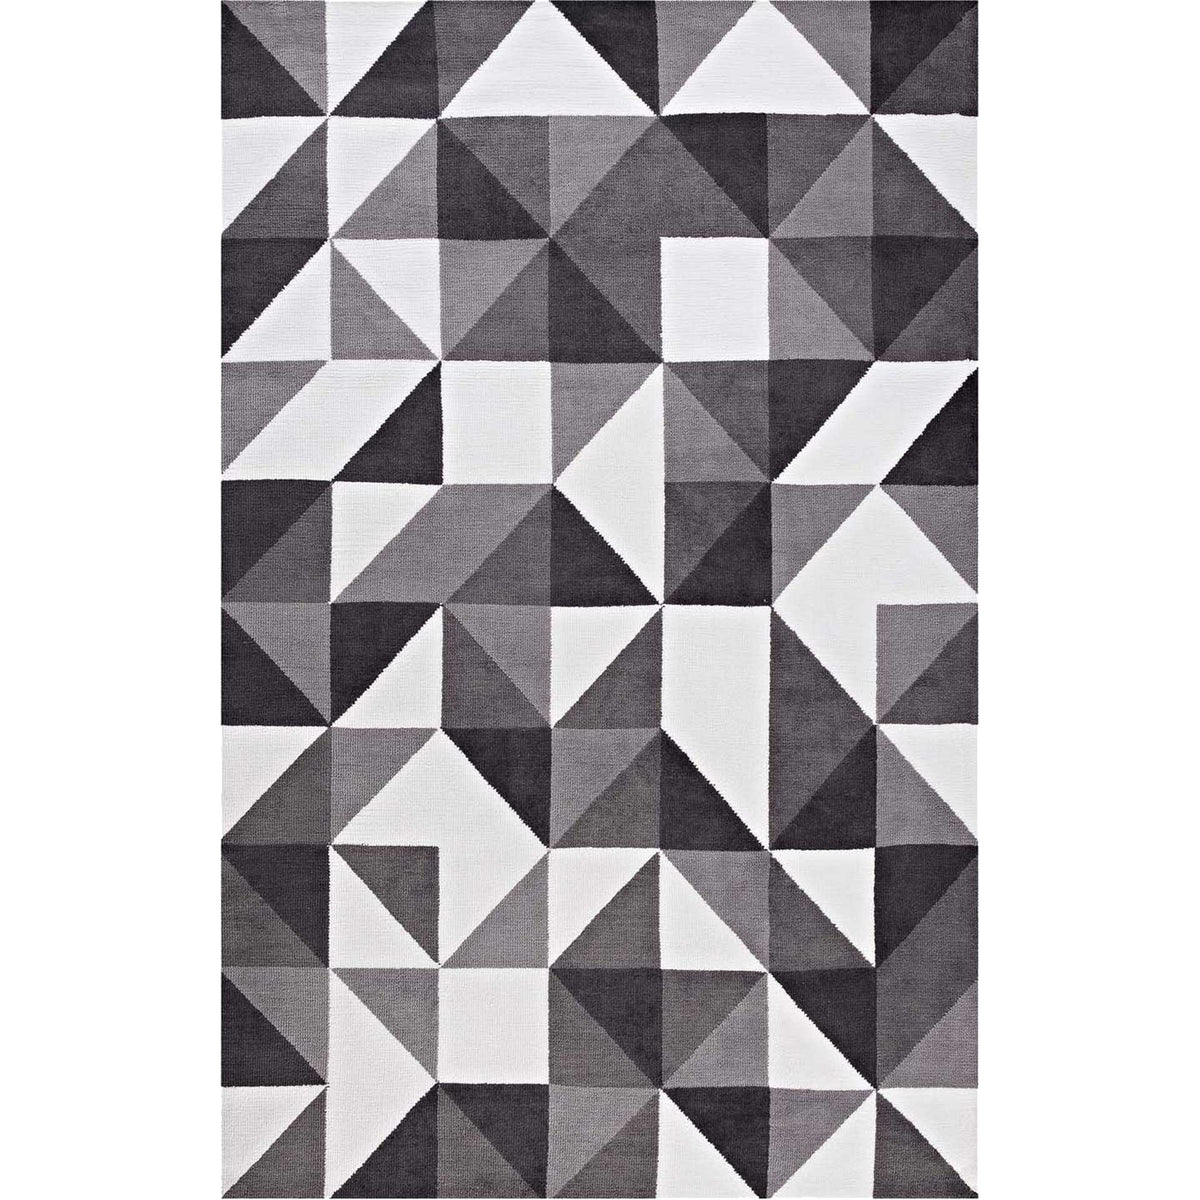 Kayes Mosaic Area Rug Black/Gray/White